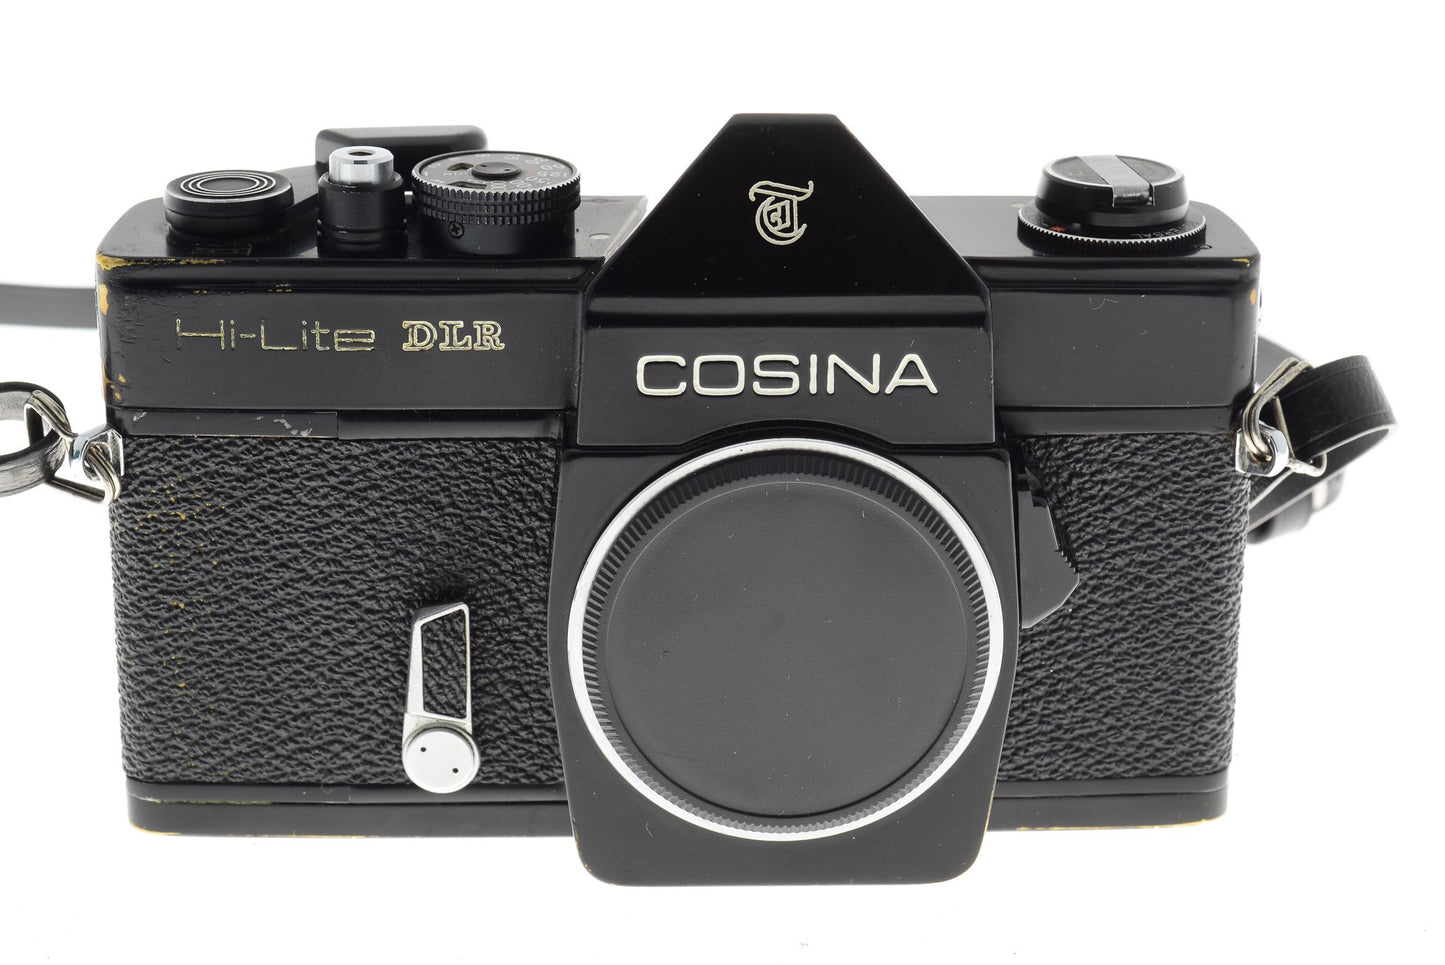 Cosina Hi-Lite DLR - Camera